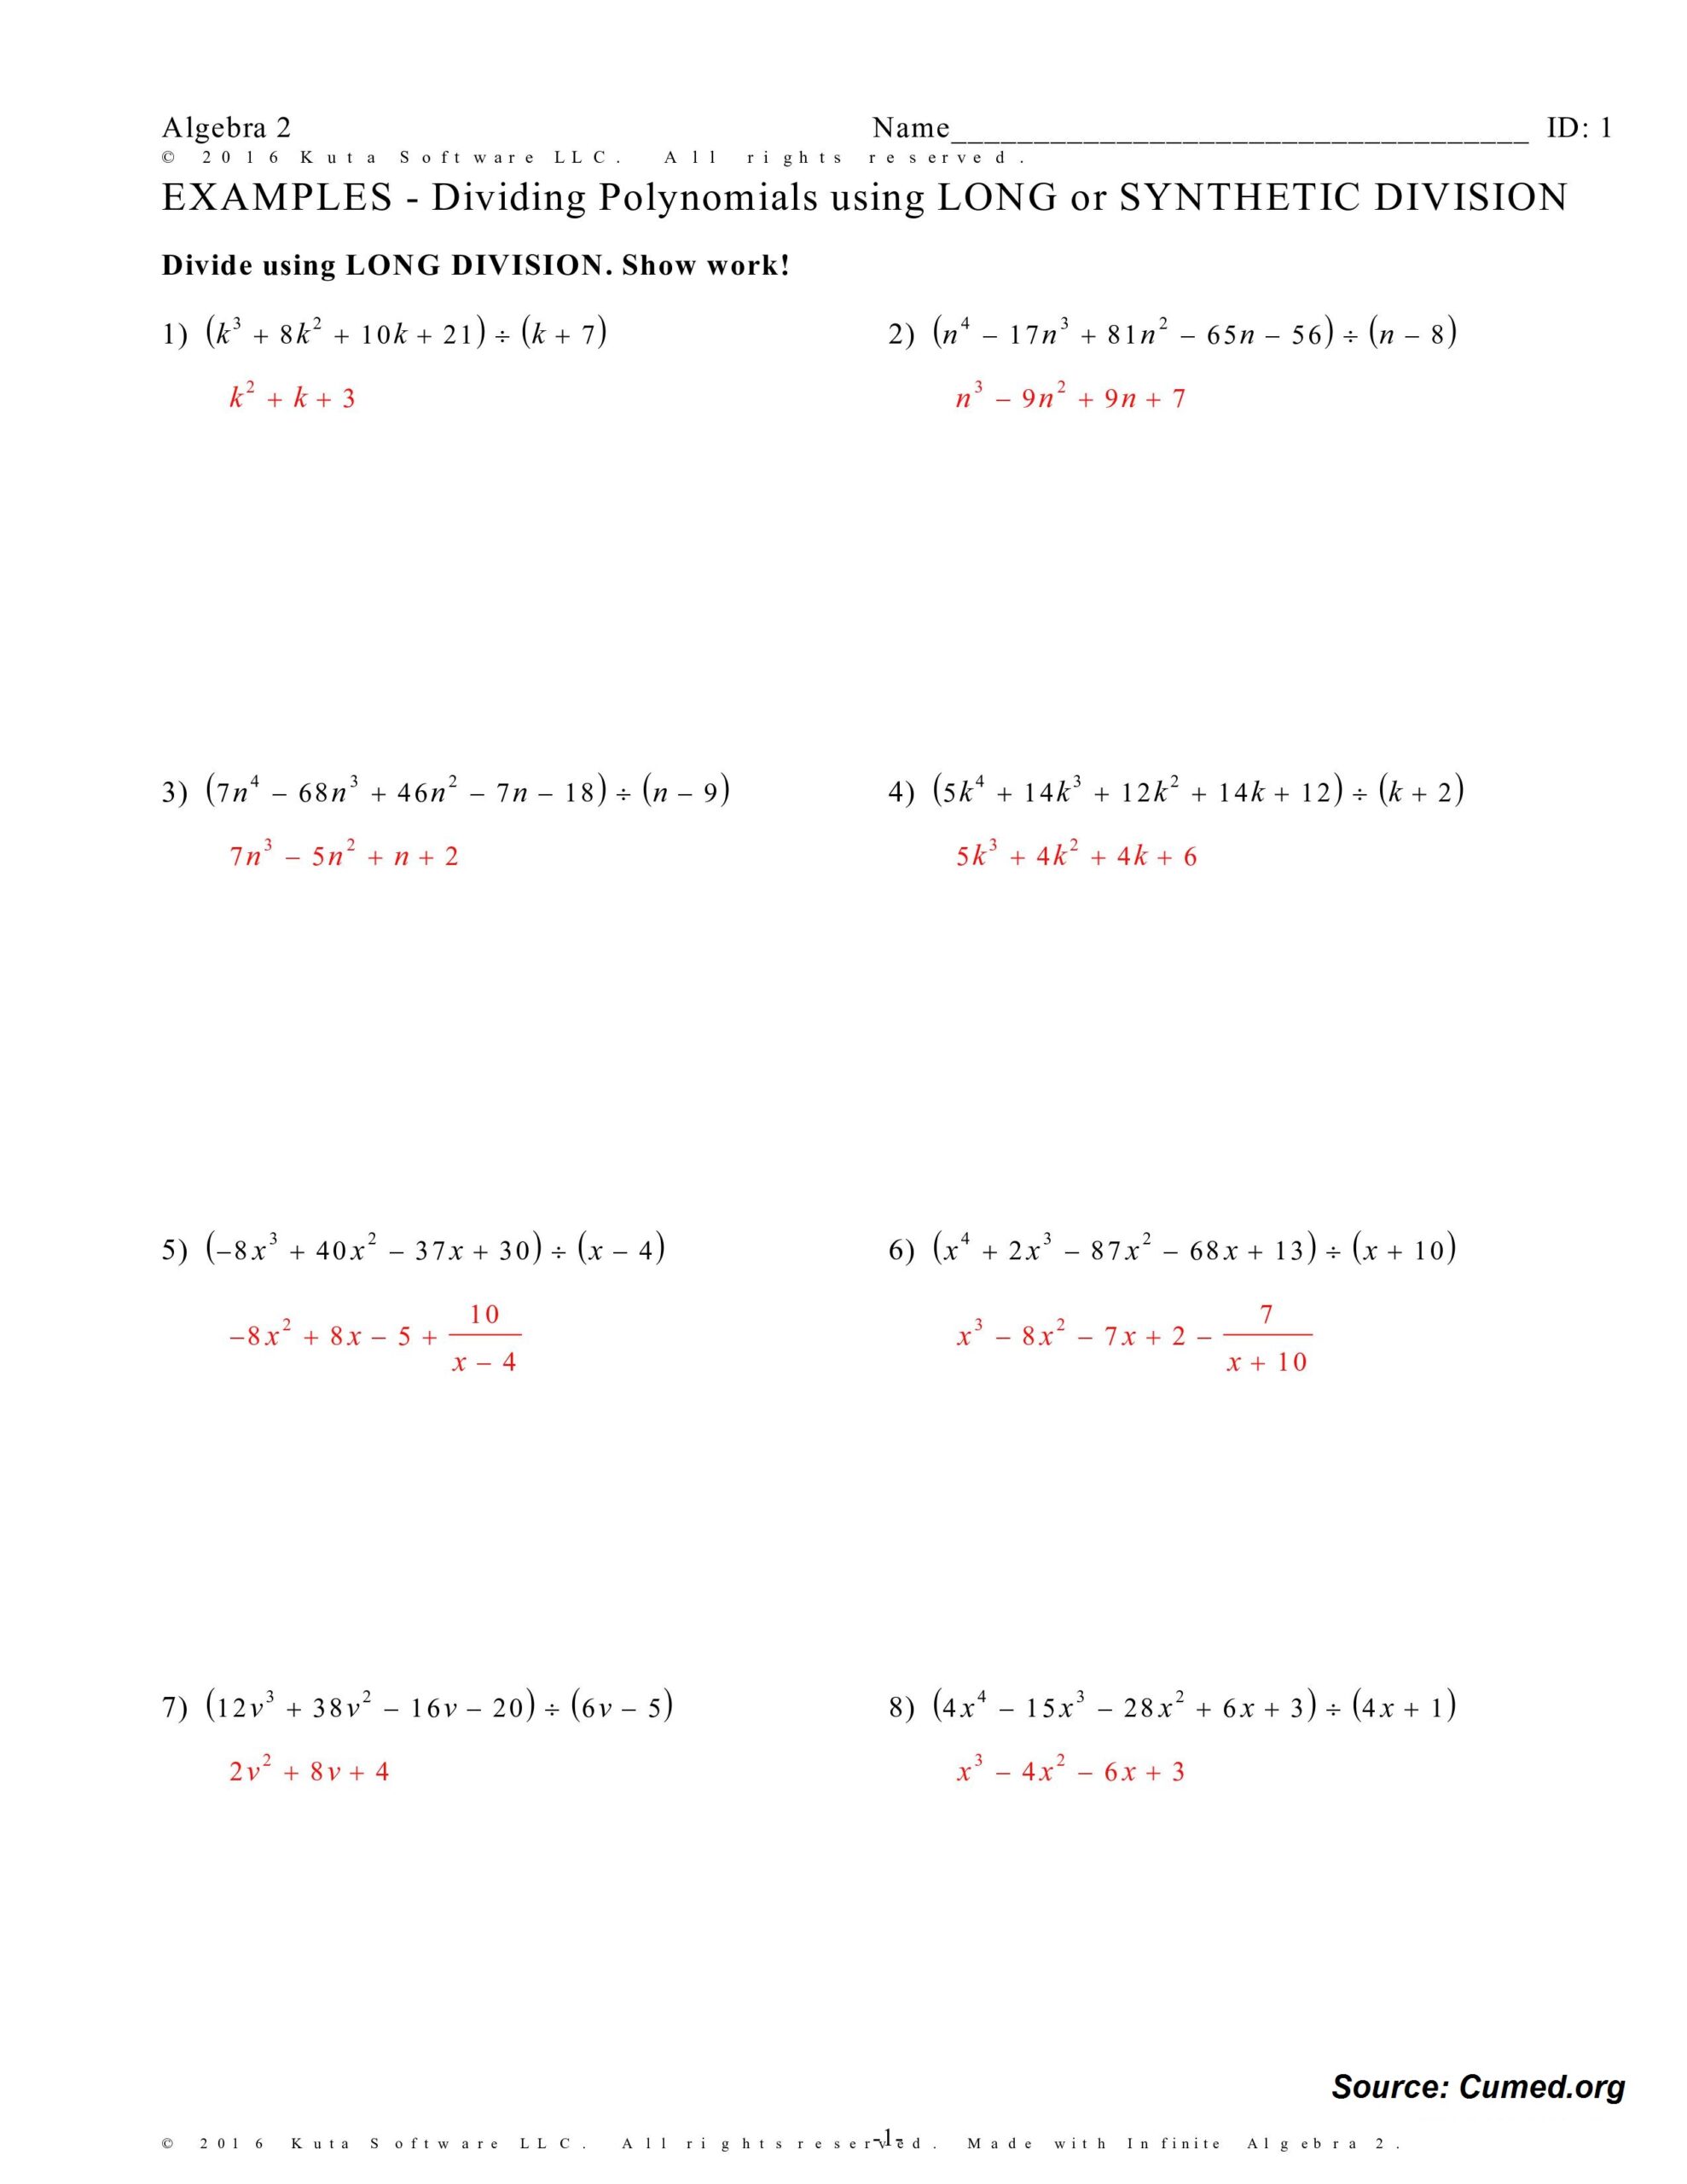 Polynomial Long Division Worksheet Answer Key